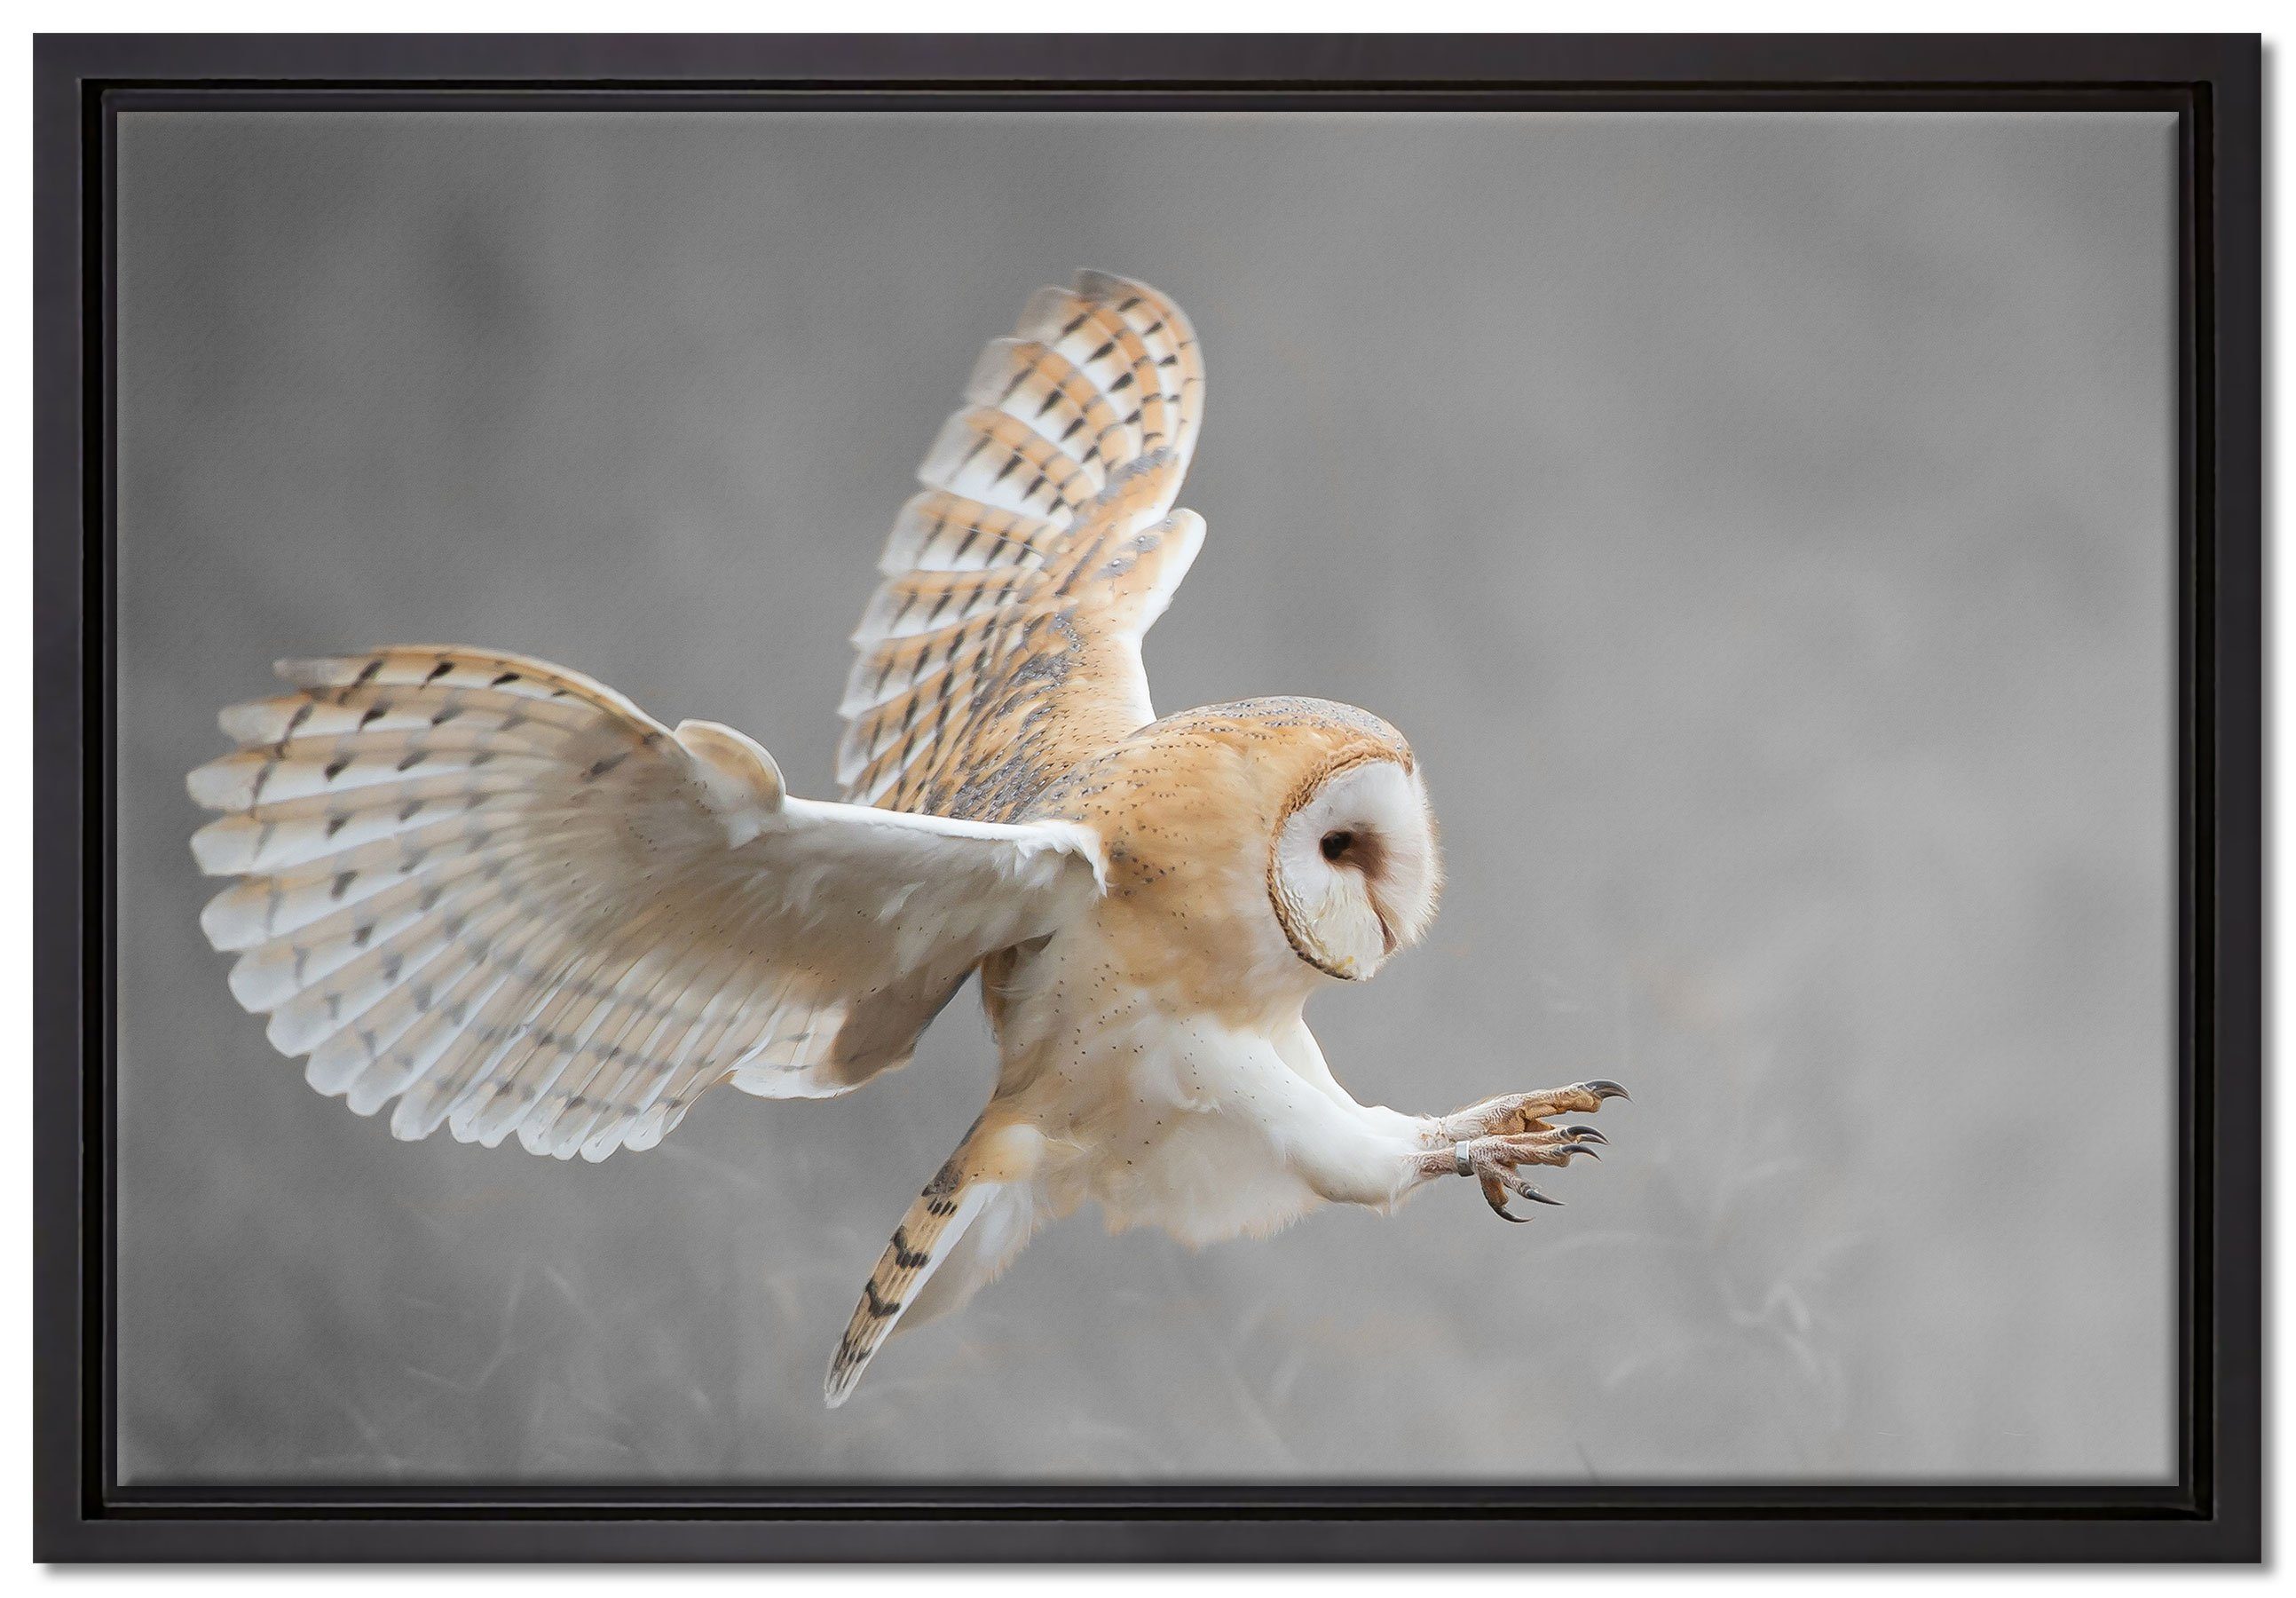 Leinwandbild inkl. Fliegende Jagd, bei Weiße Leinwandbild Zackenaufhänger (1 bespannt, fertig gefasst, St), der in Schattenfugen-Bilderrahmen Eule einem Wanddekoration Pixxprint